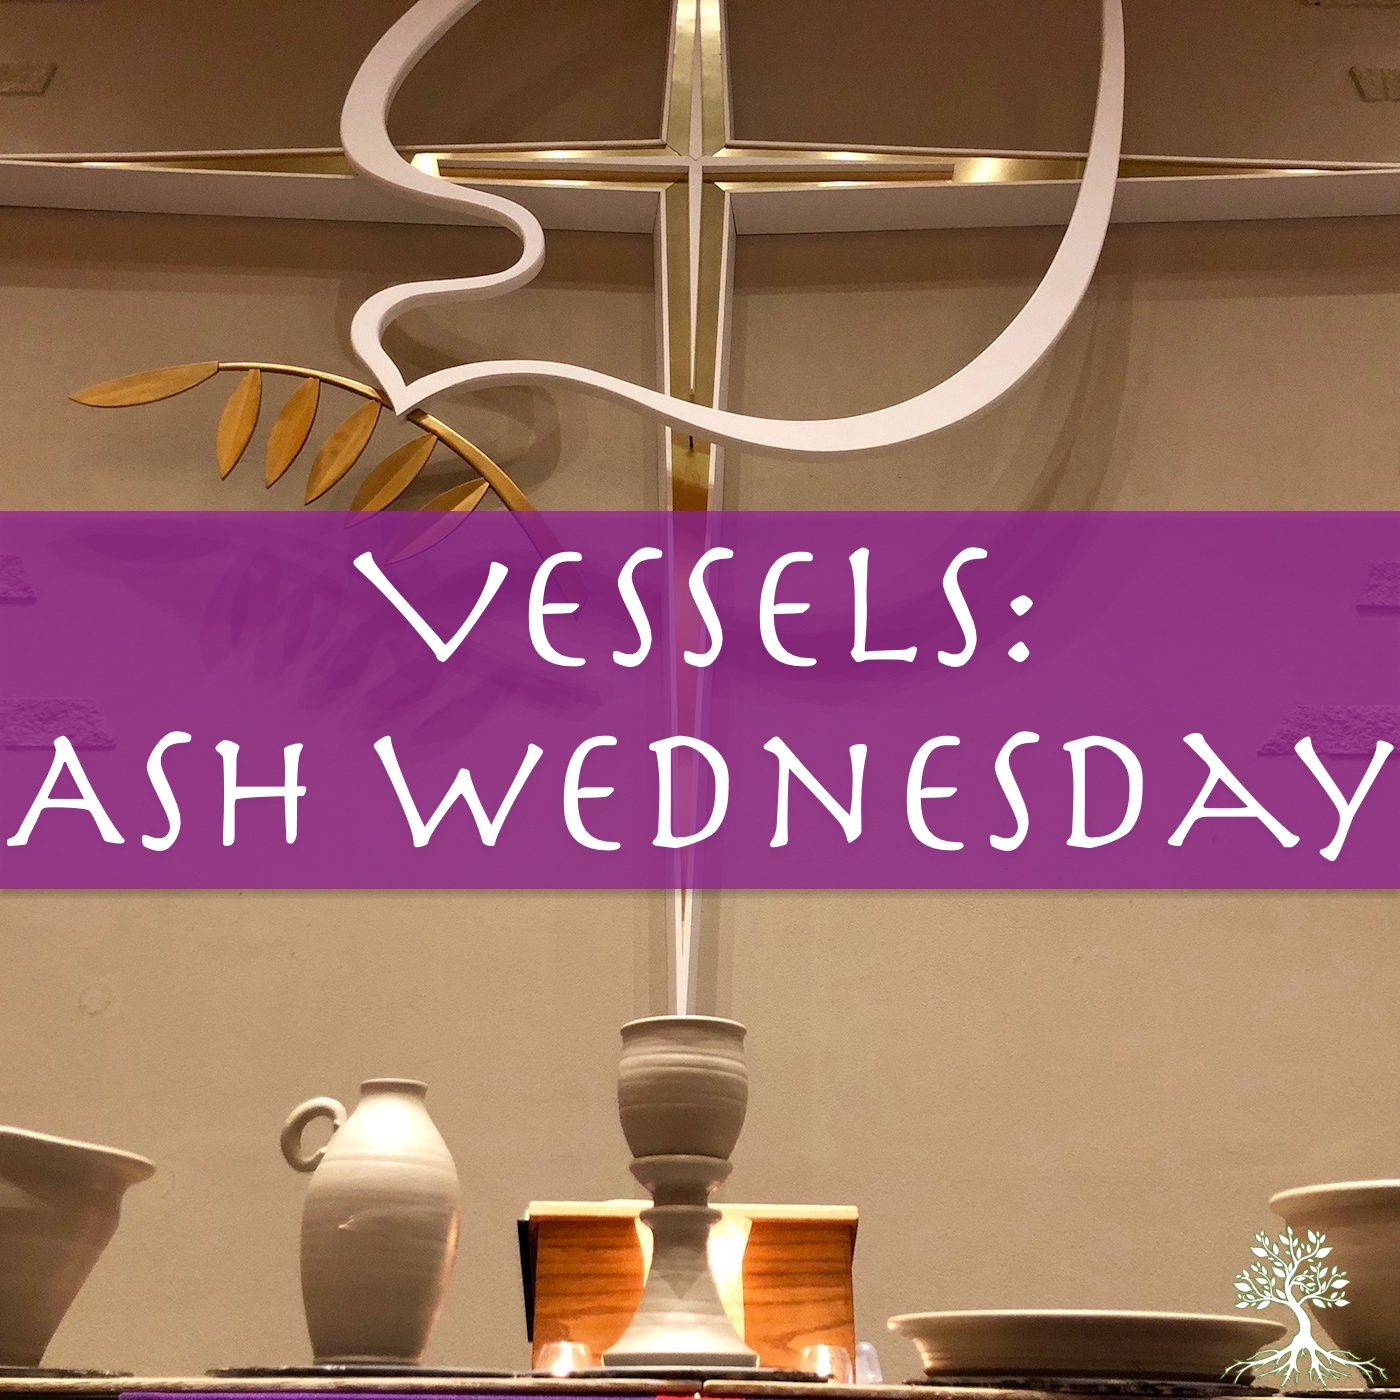 Vessels: Ash Wednesday (Chad Brekke 2/14/18)